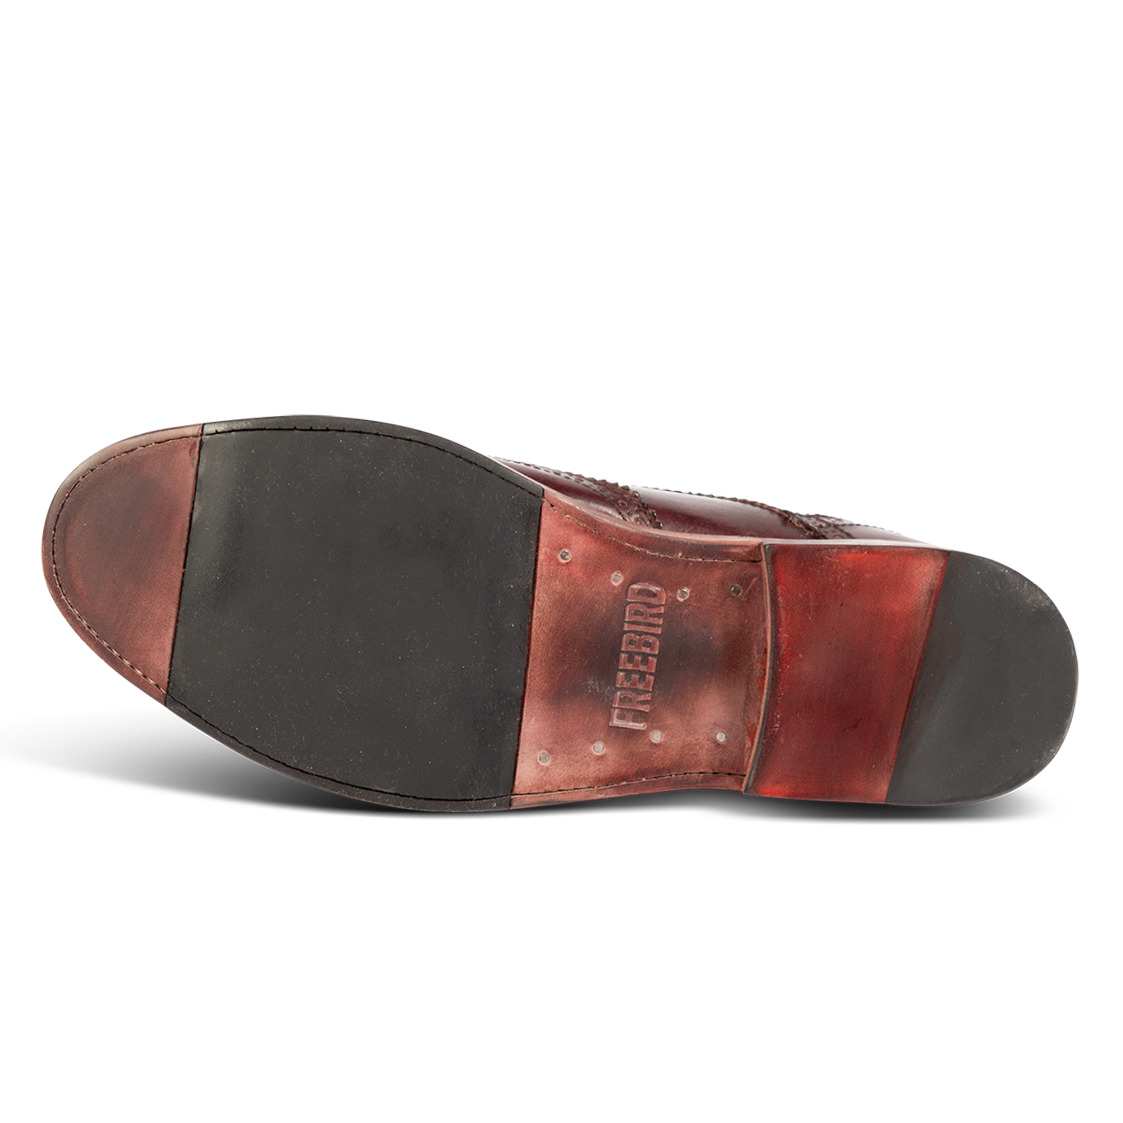 Leather sole imprinted with FREEBIRD on men's Kensington wine shoe